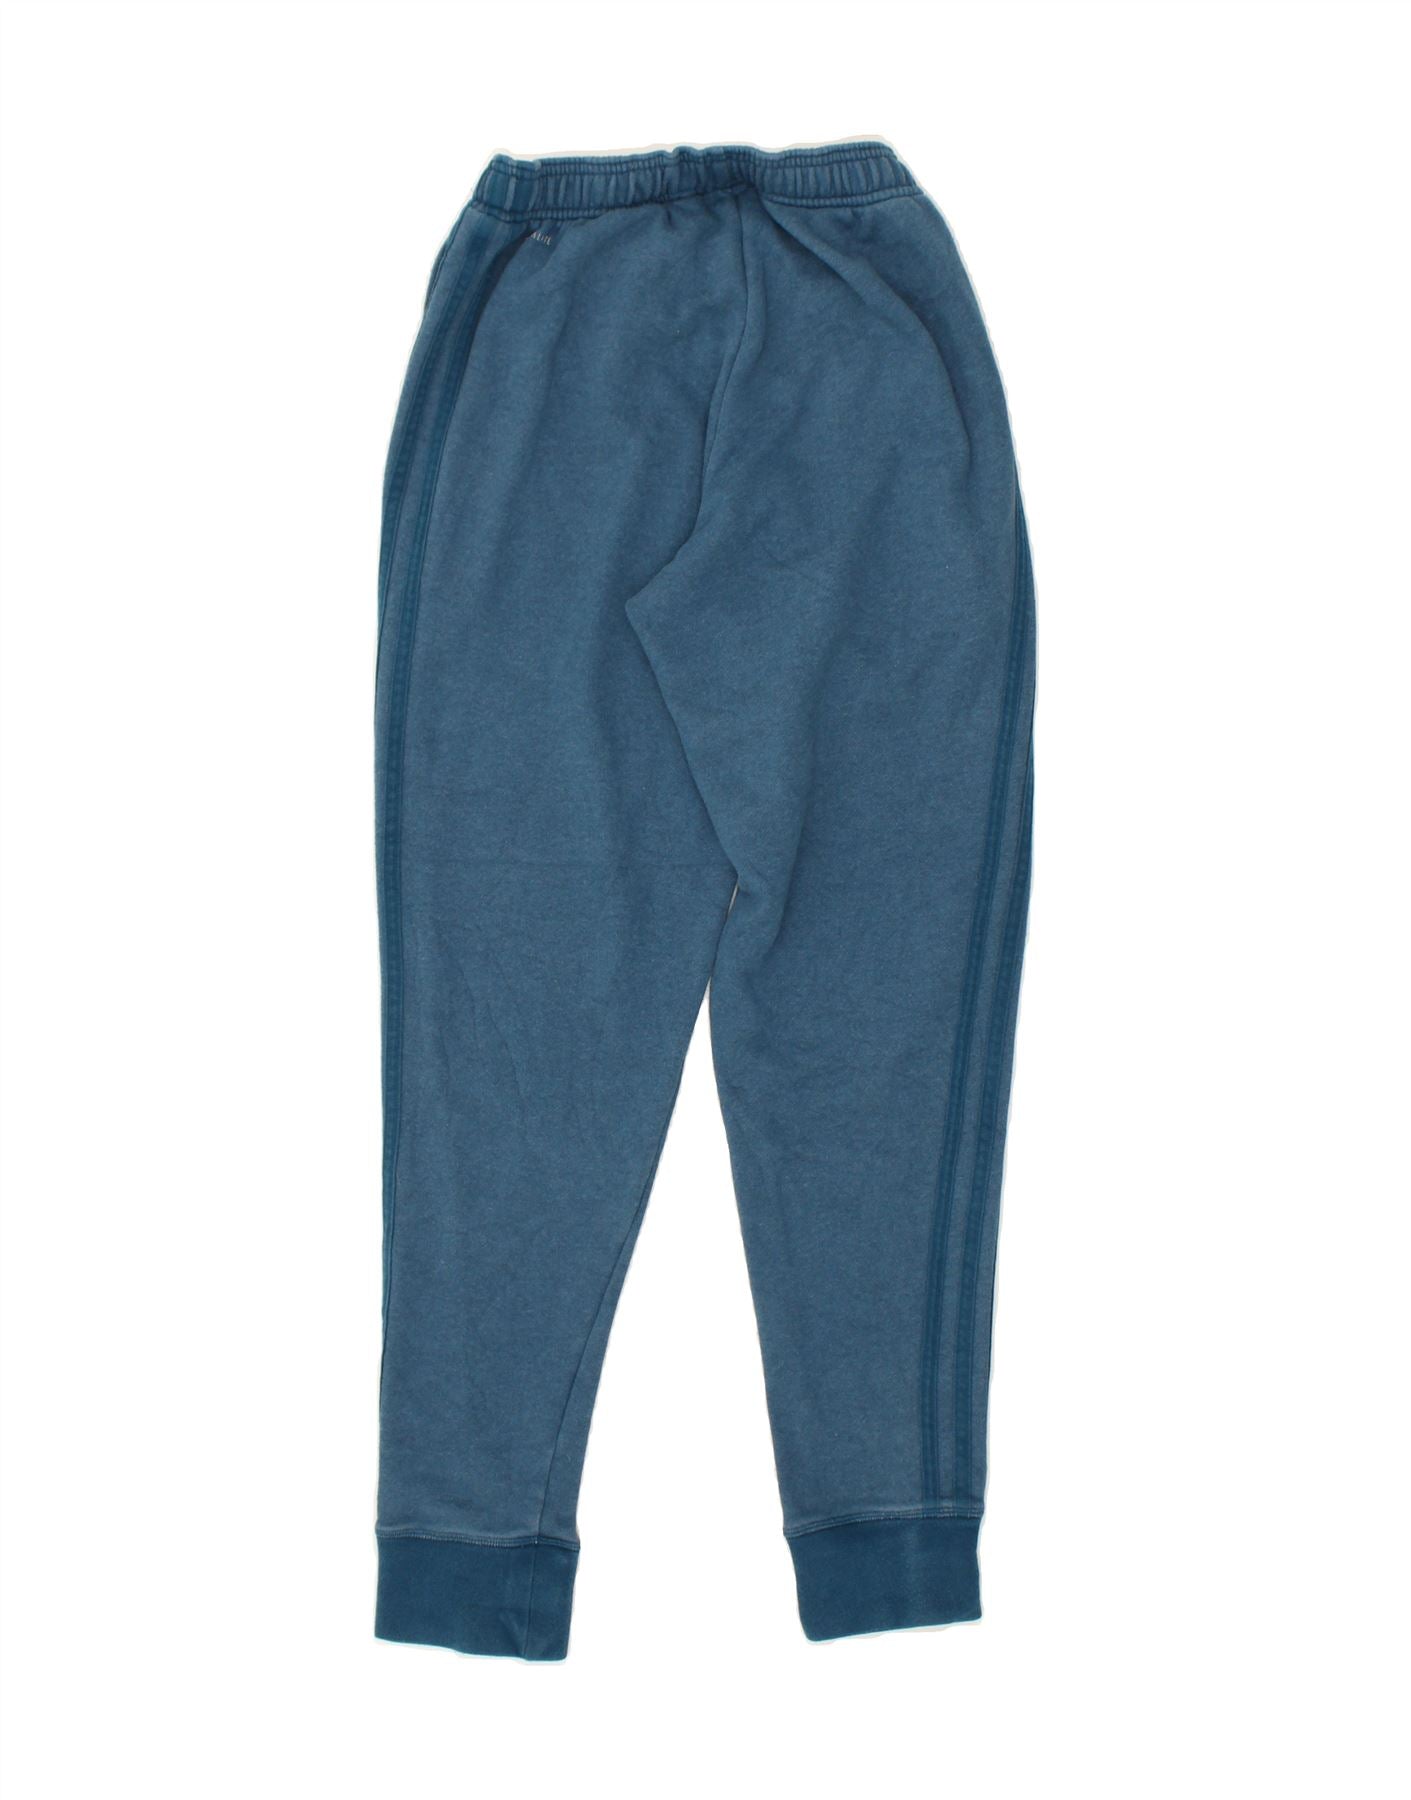 ADIDAS Homme Climalite Survêtement Pantalon Joggers XS Bleu Marine Coton | Vintage Adidas | Économie | Adidas d'occasion | Vêtements d'occasion | Messine Hembry